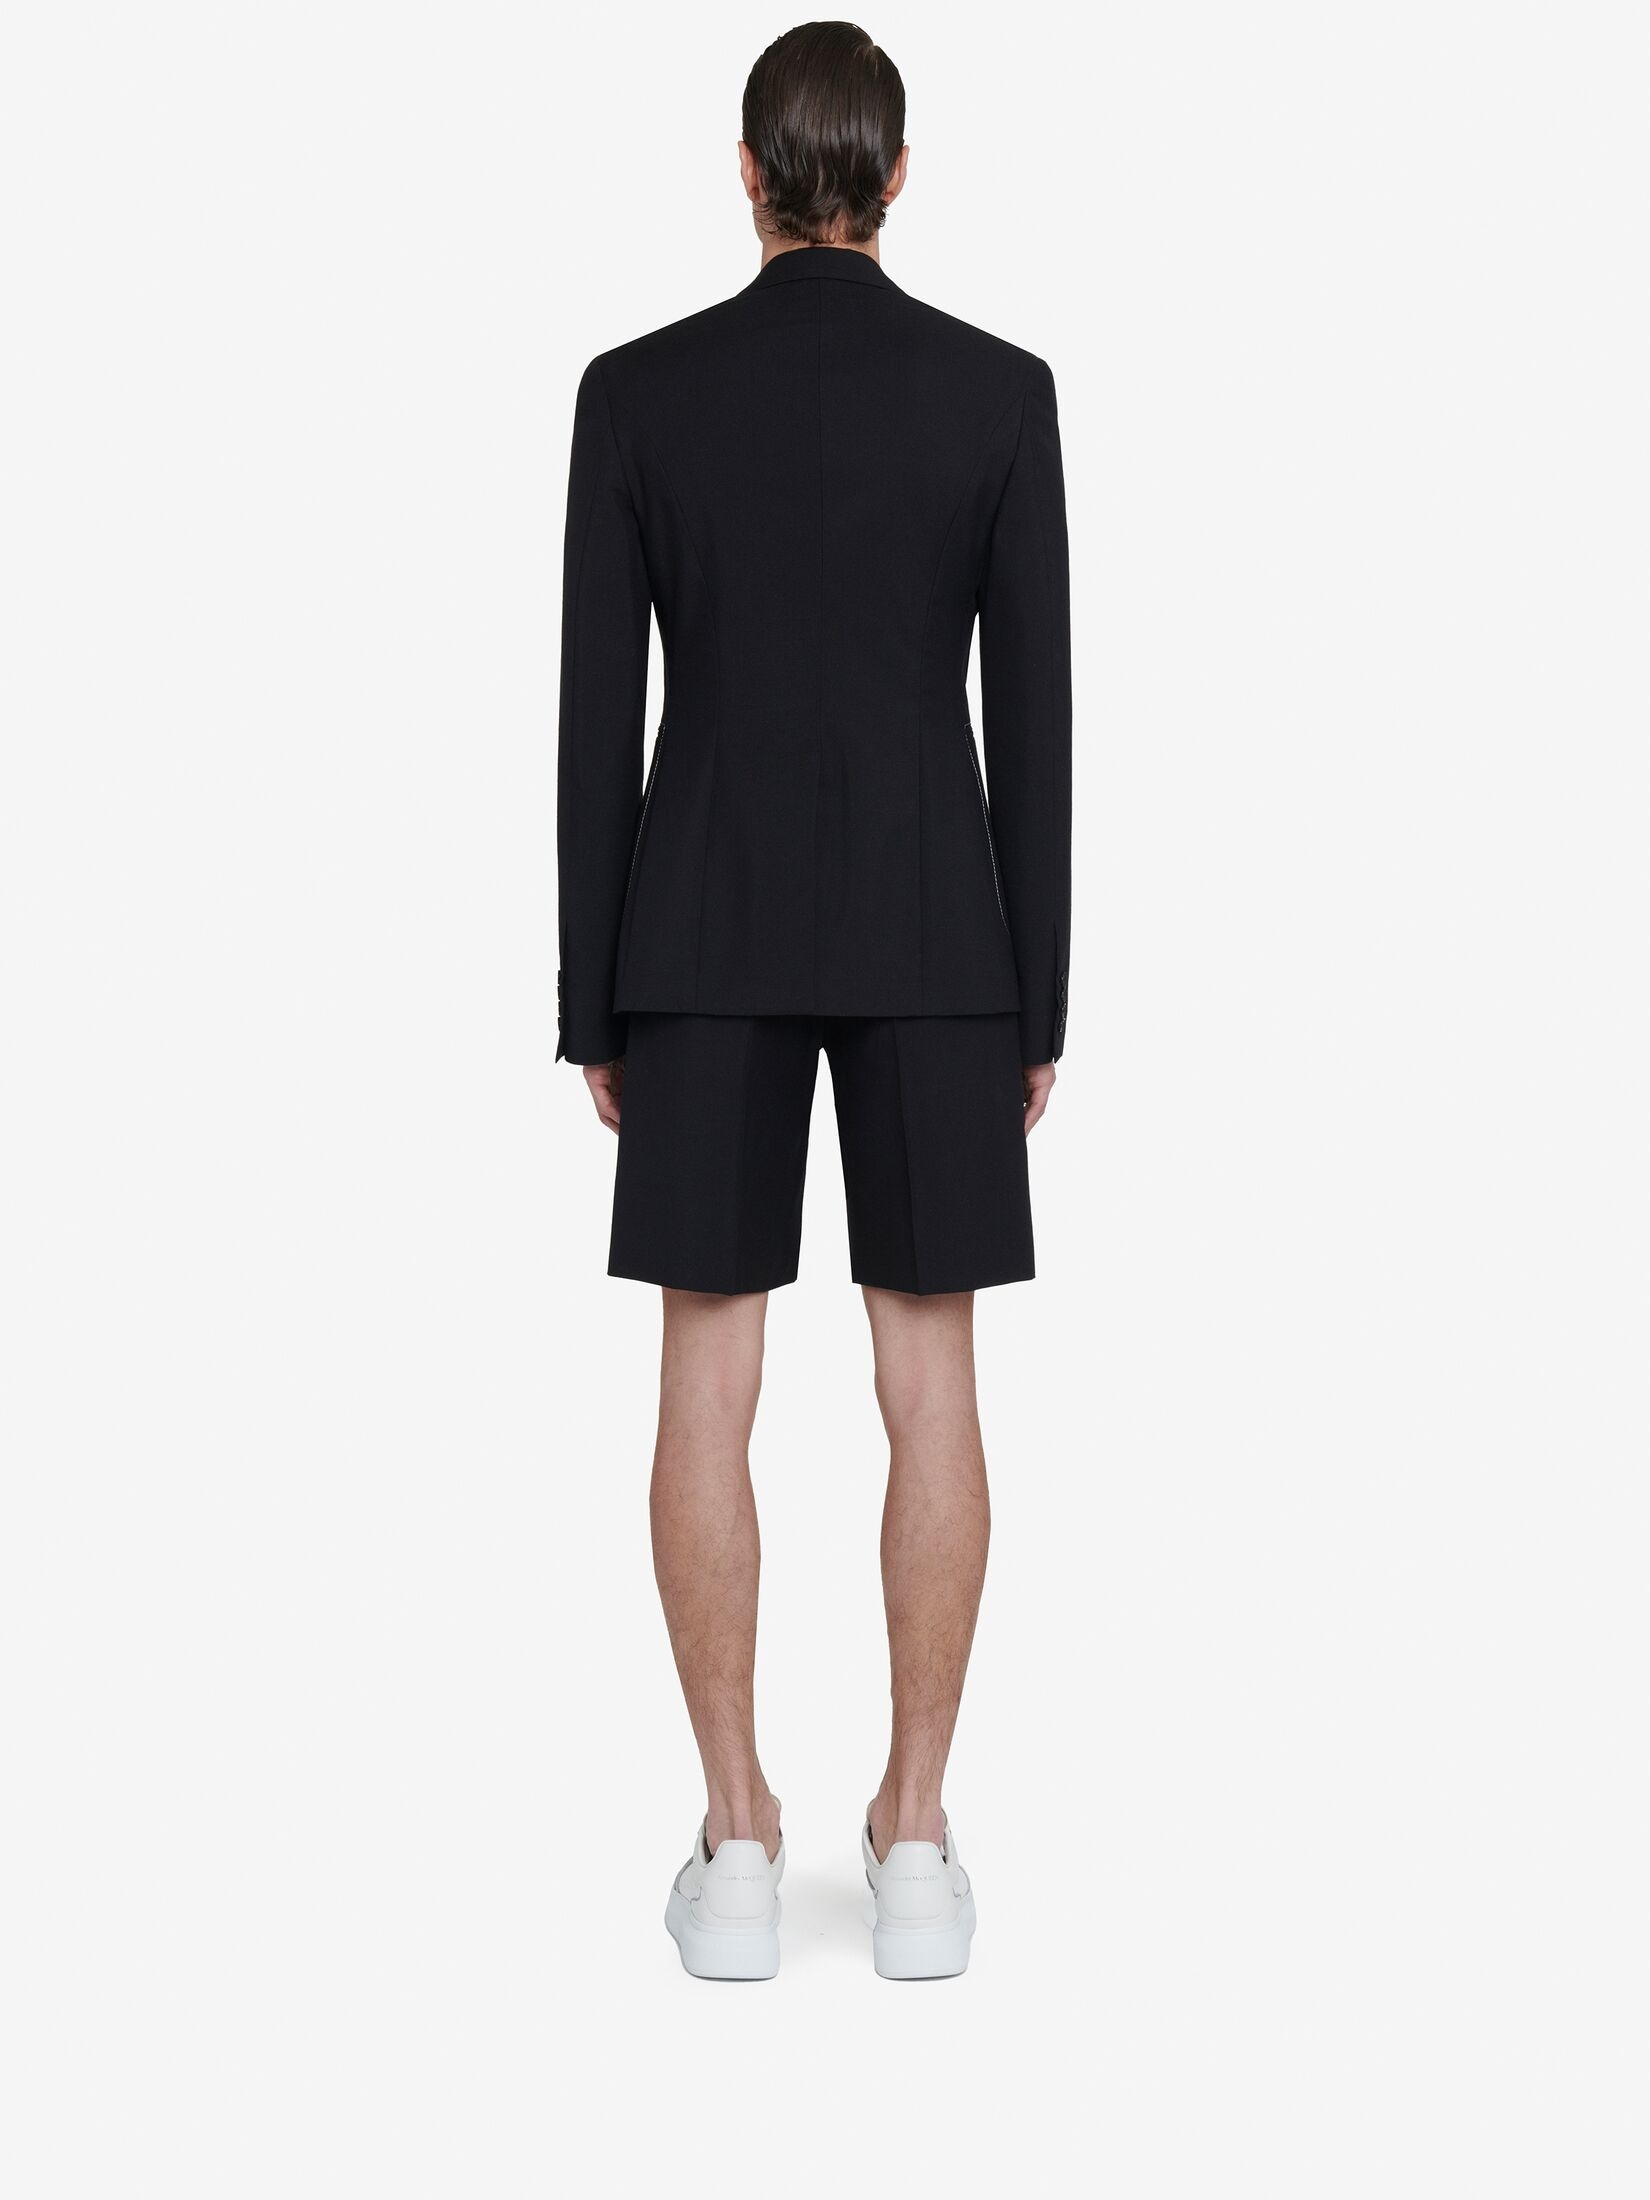 Men's Tailored Shorts in Black - 4